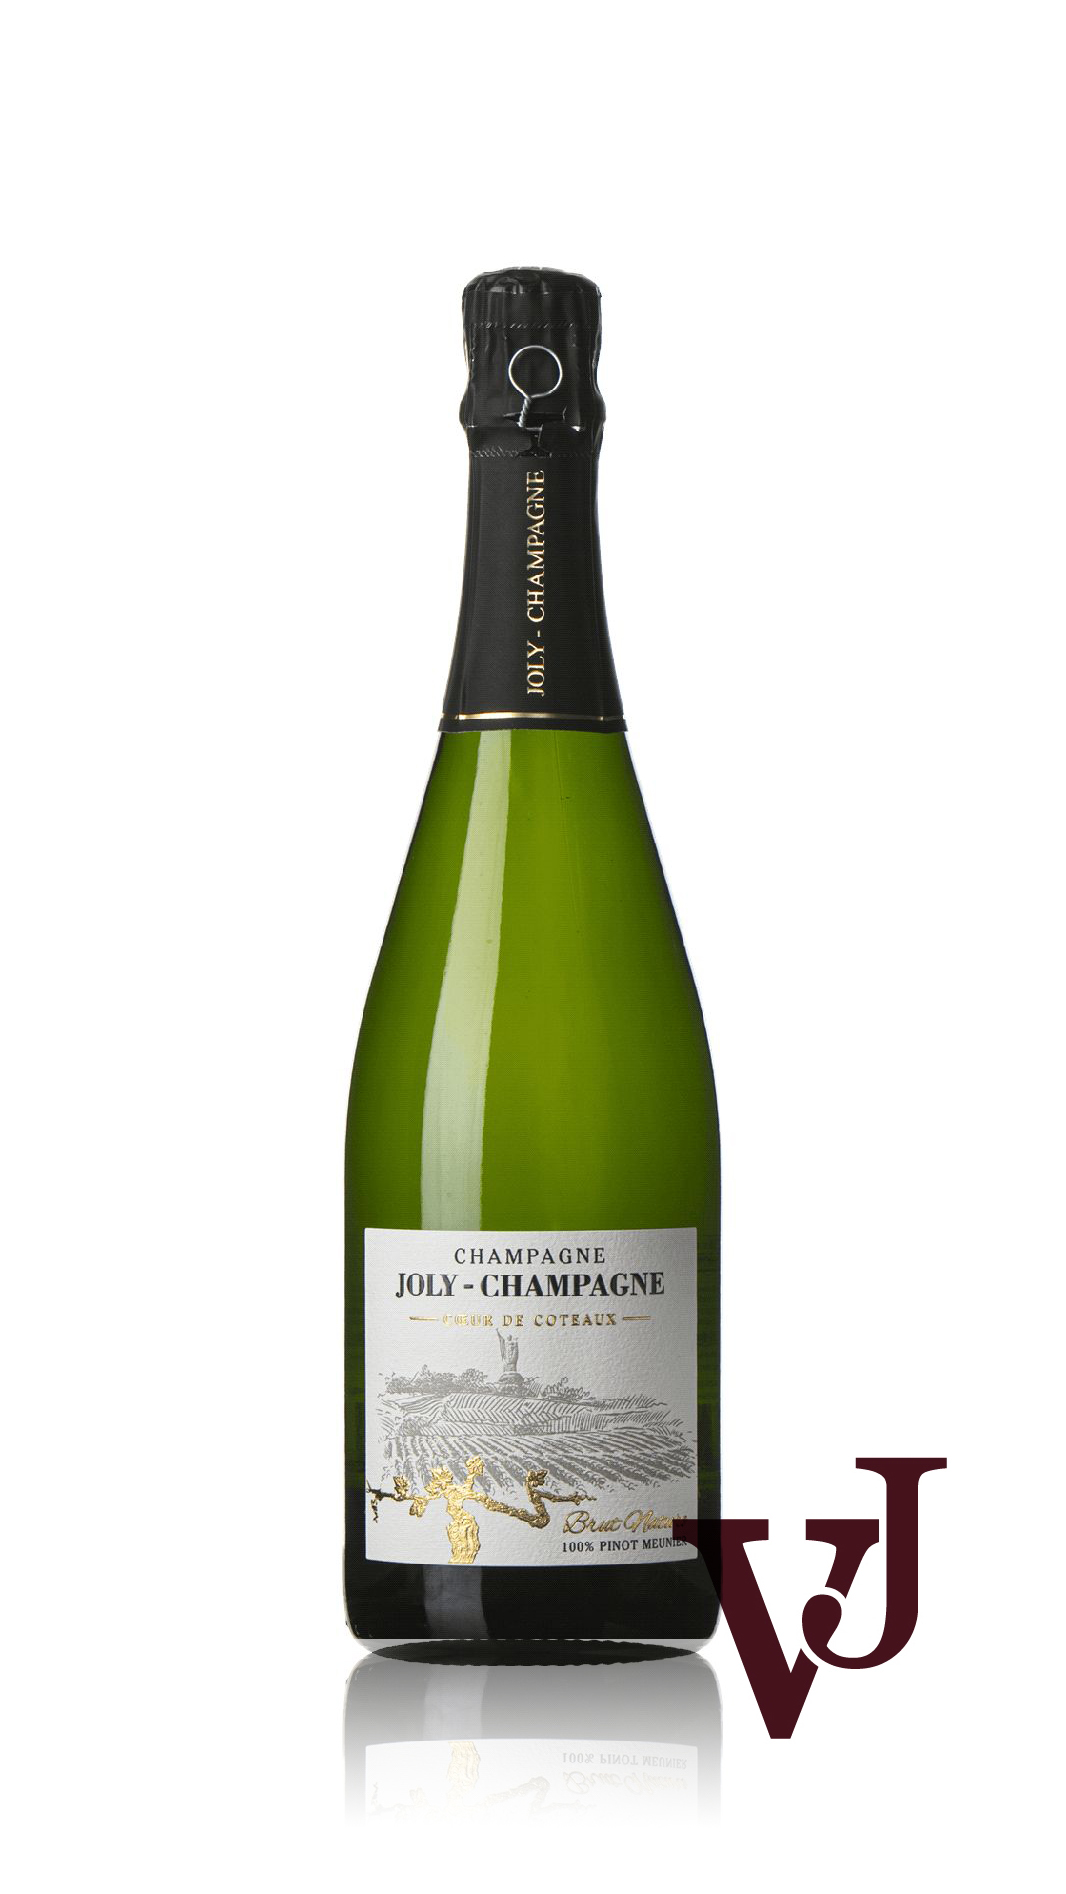 Mousserande Vin - Joly Coeur de Coteaux artikel nummer 9033701 från producenten Joly-Champagne från området Frankrike